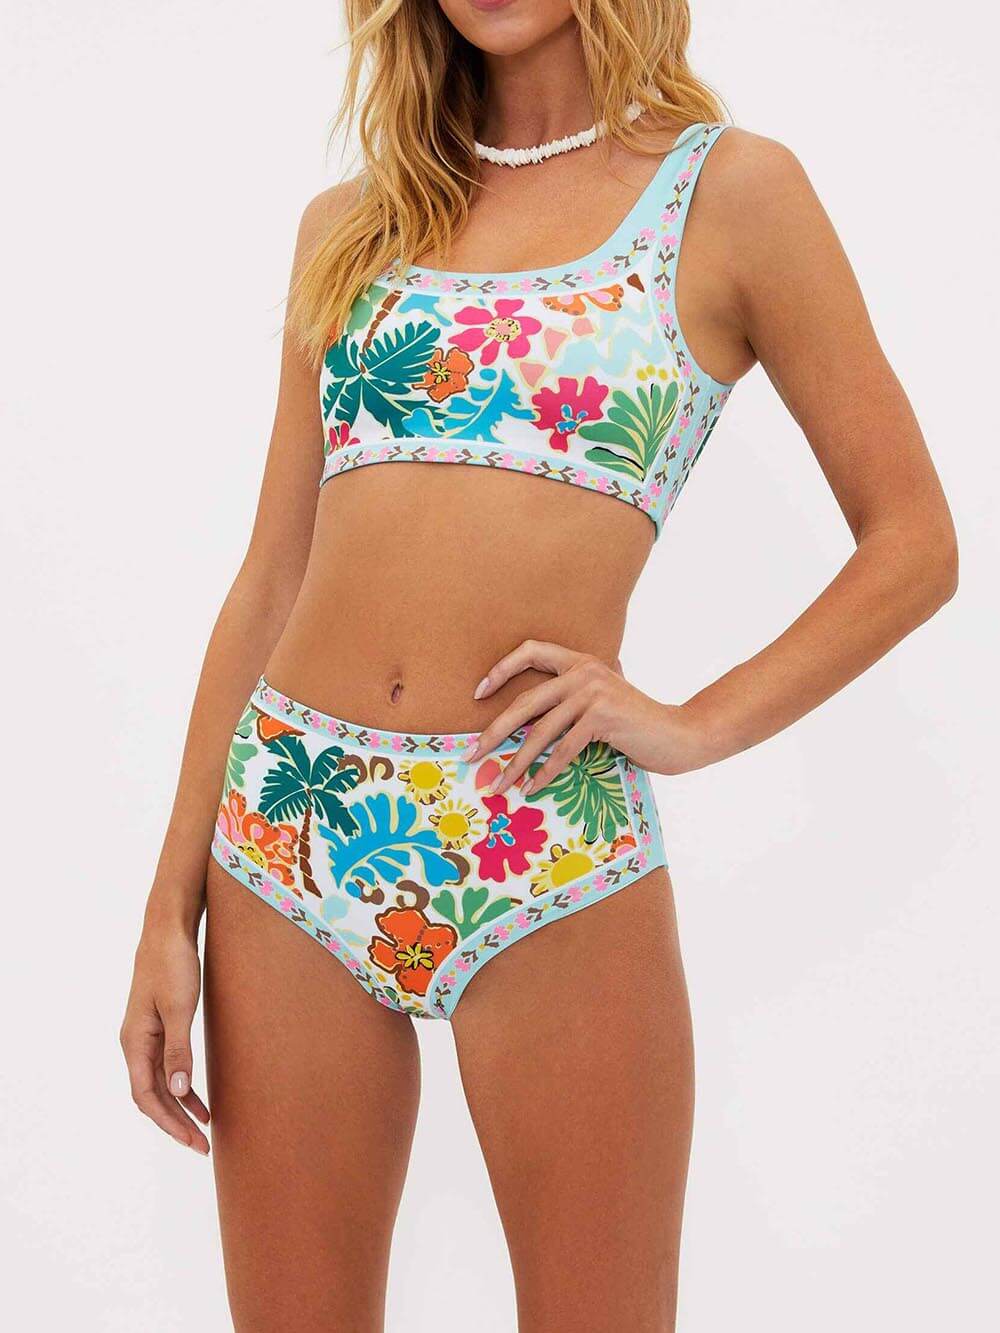 Eenzegaarteg Floral Print Stretch Bikini Swimsuit